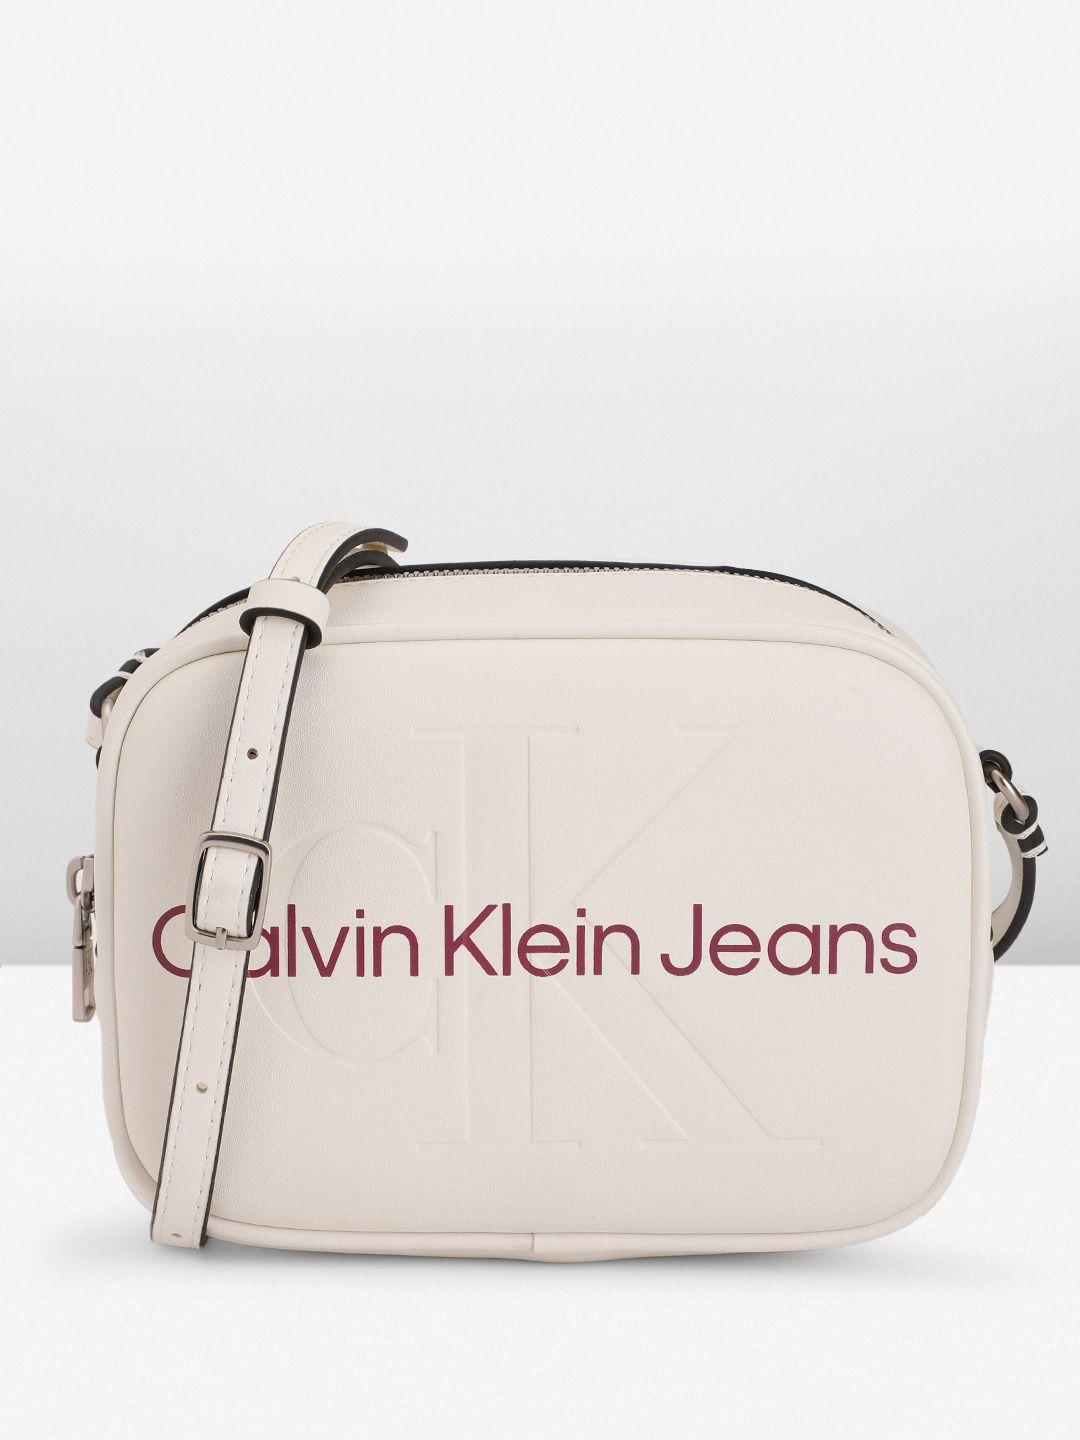 calvin klein brand logo printed & debossed structured sling bag